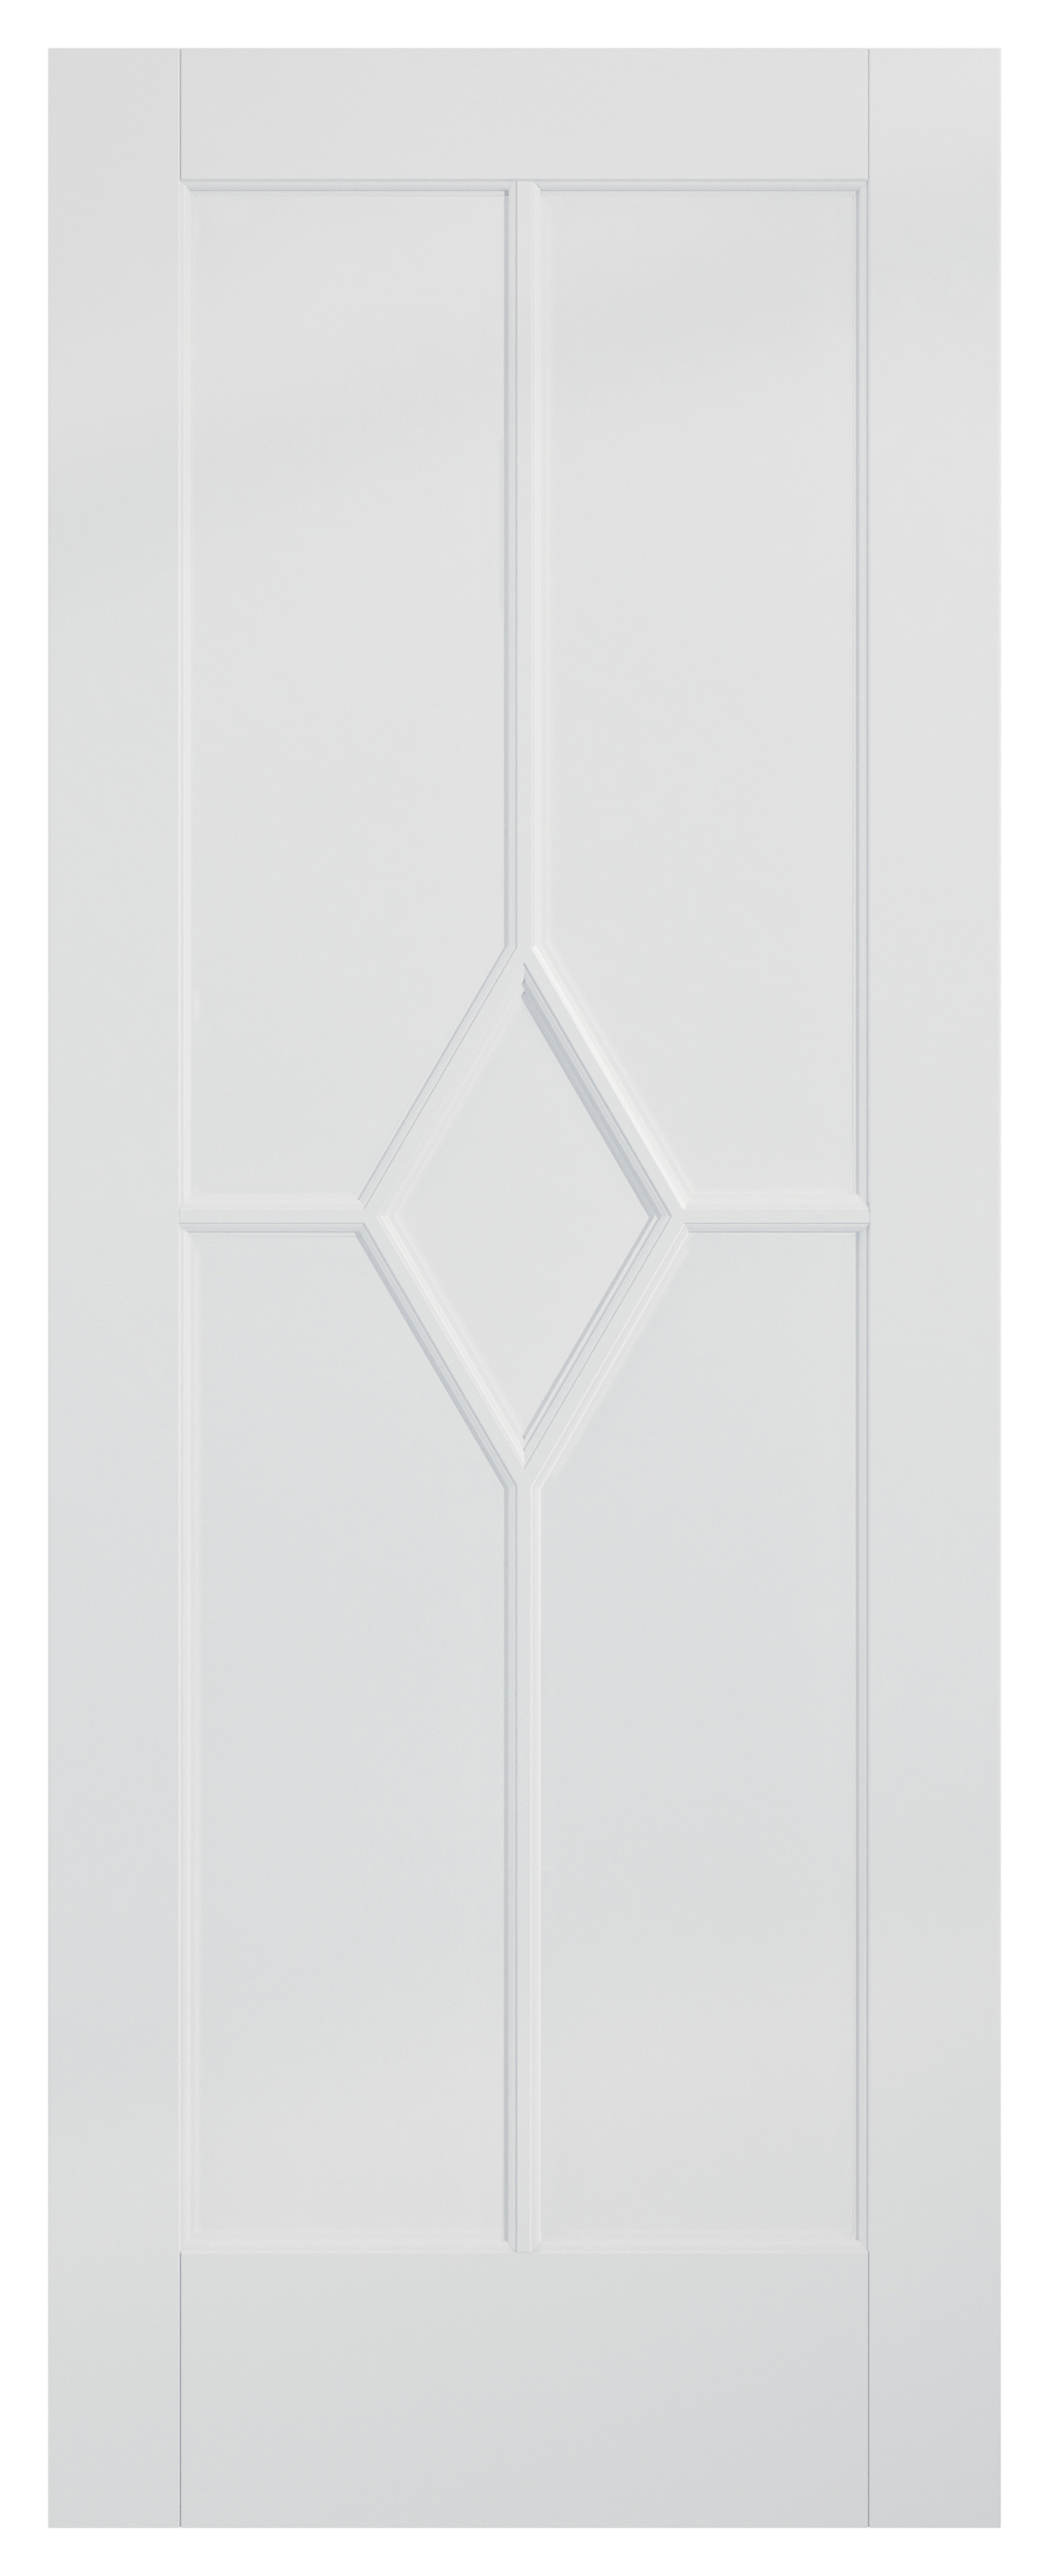 Image of LPD Internal Reims 5 Panel Primed White Solid Core Door - 762 x 1981mm